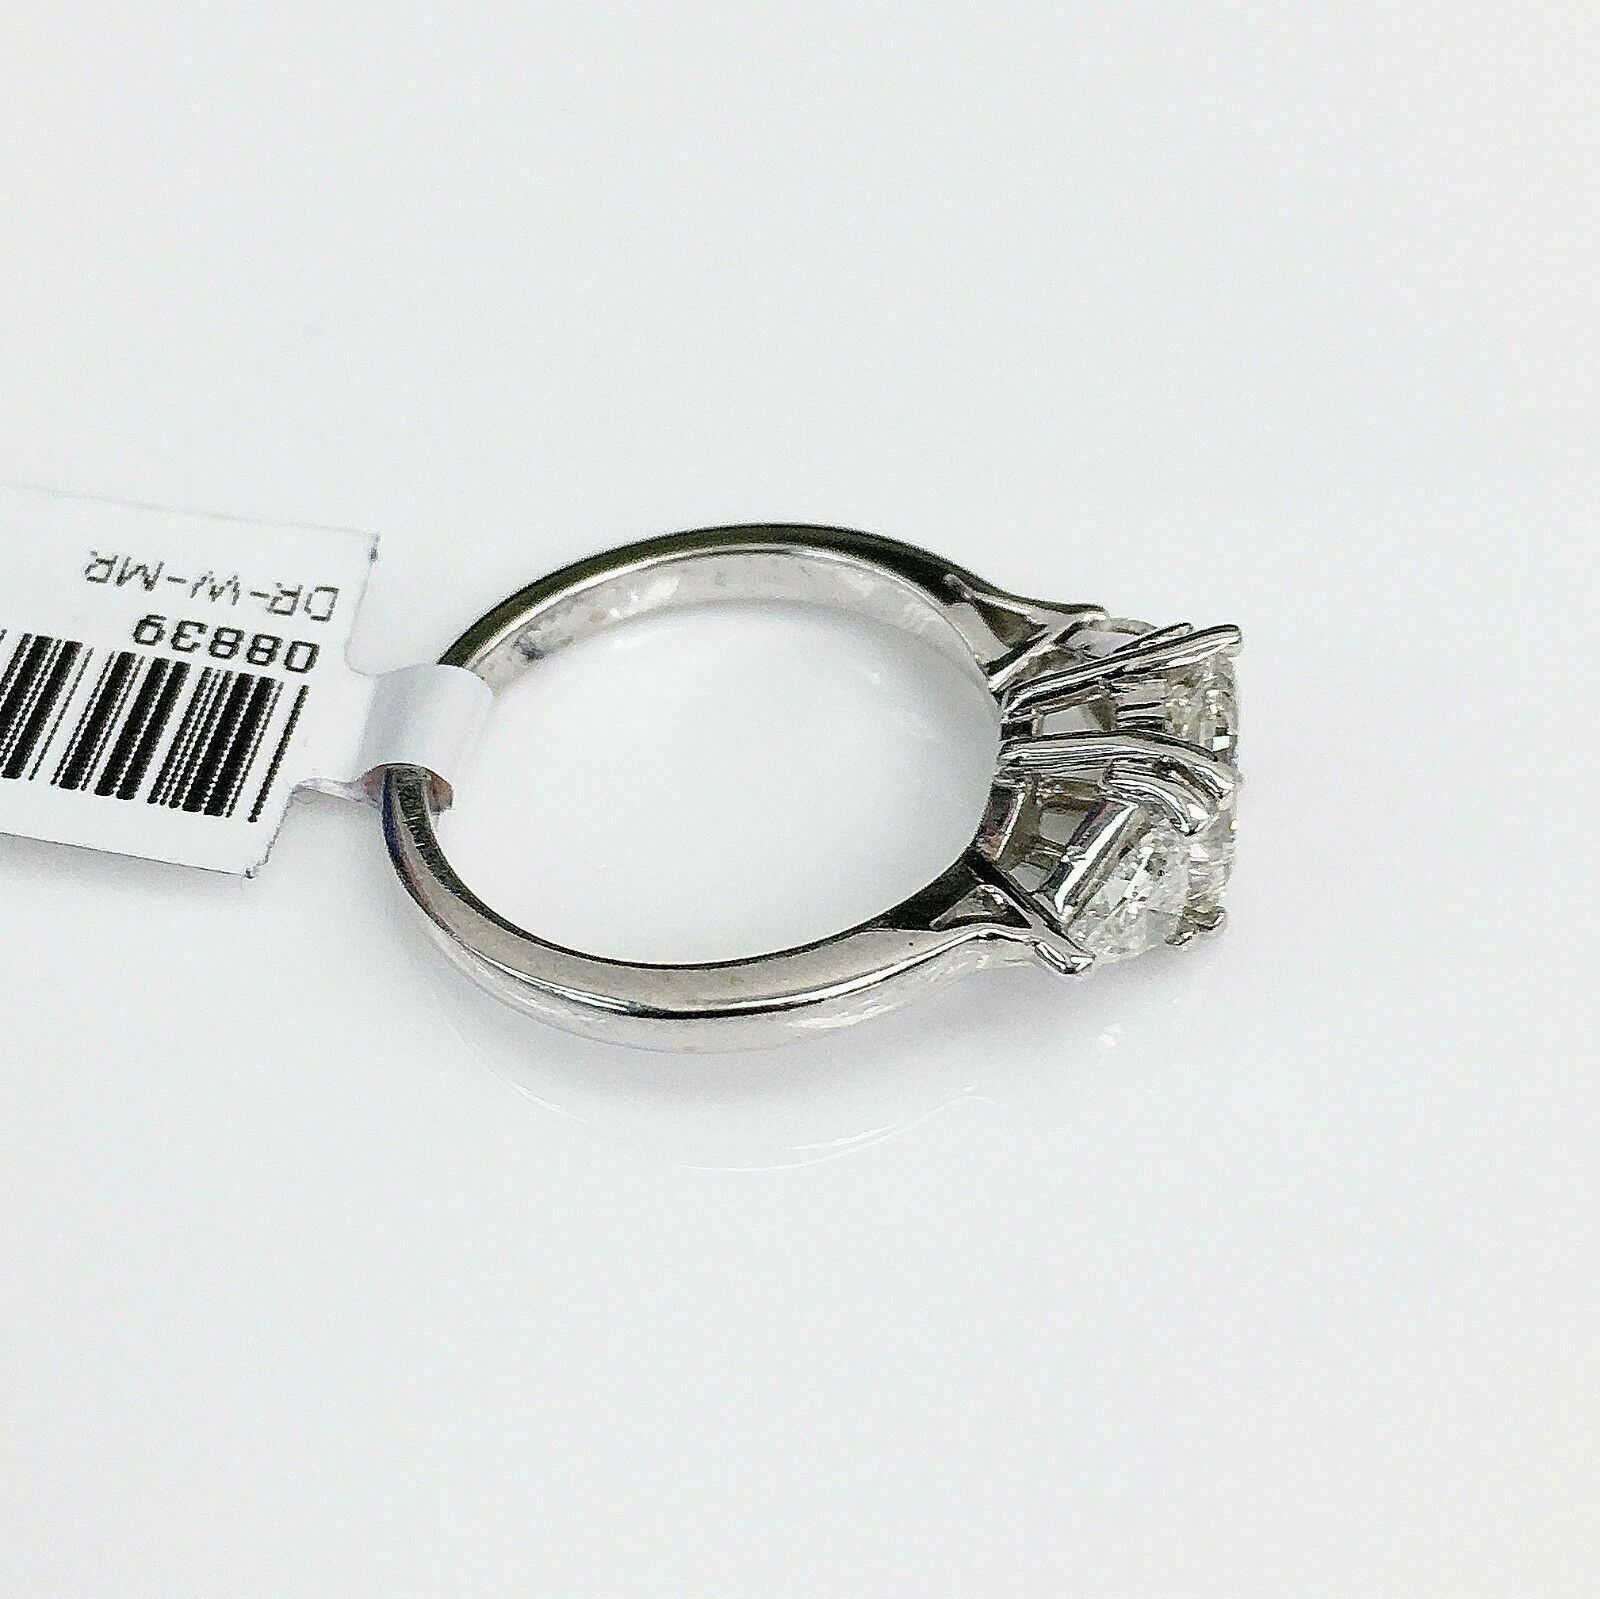 1.43 Carats t.w. Diamond Wedding/Engagement Ring EGL USA 1.02 Center Diamond 14K